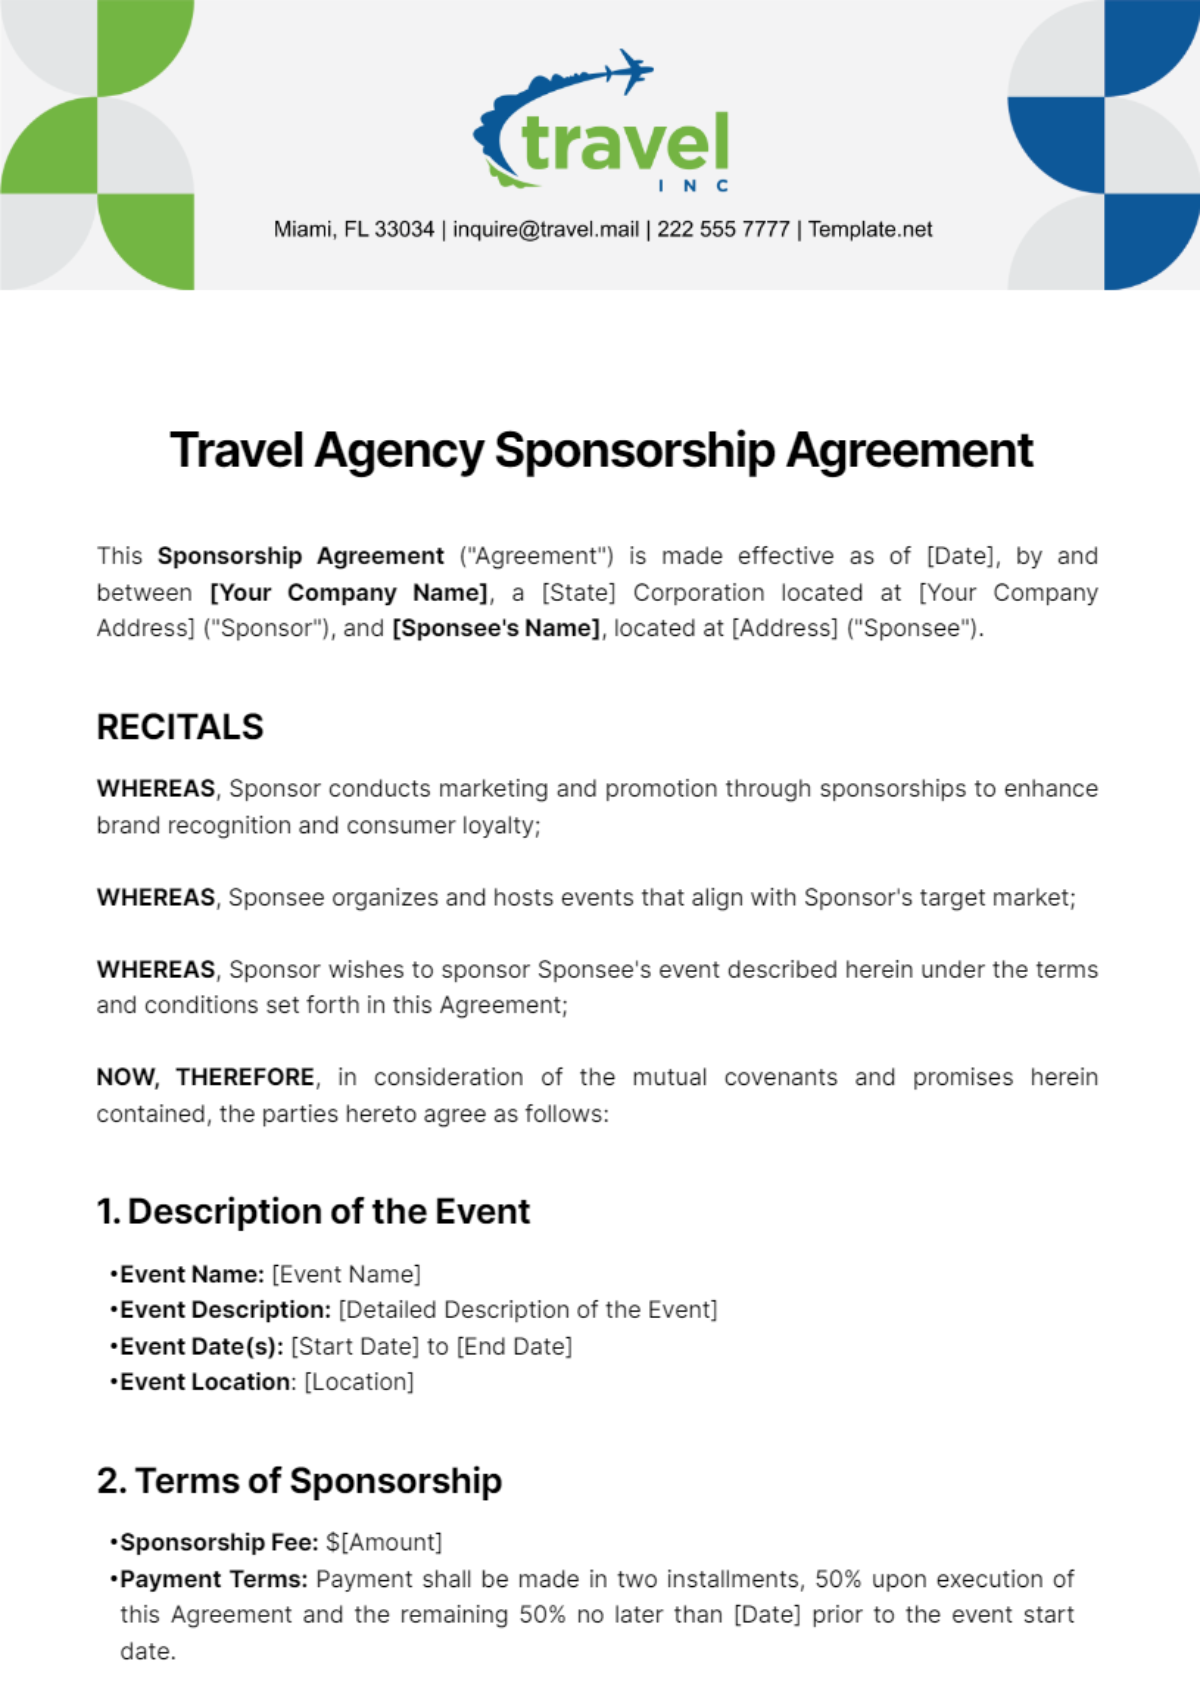 Travel Agency Sponsorship Agreement Template